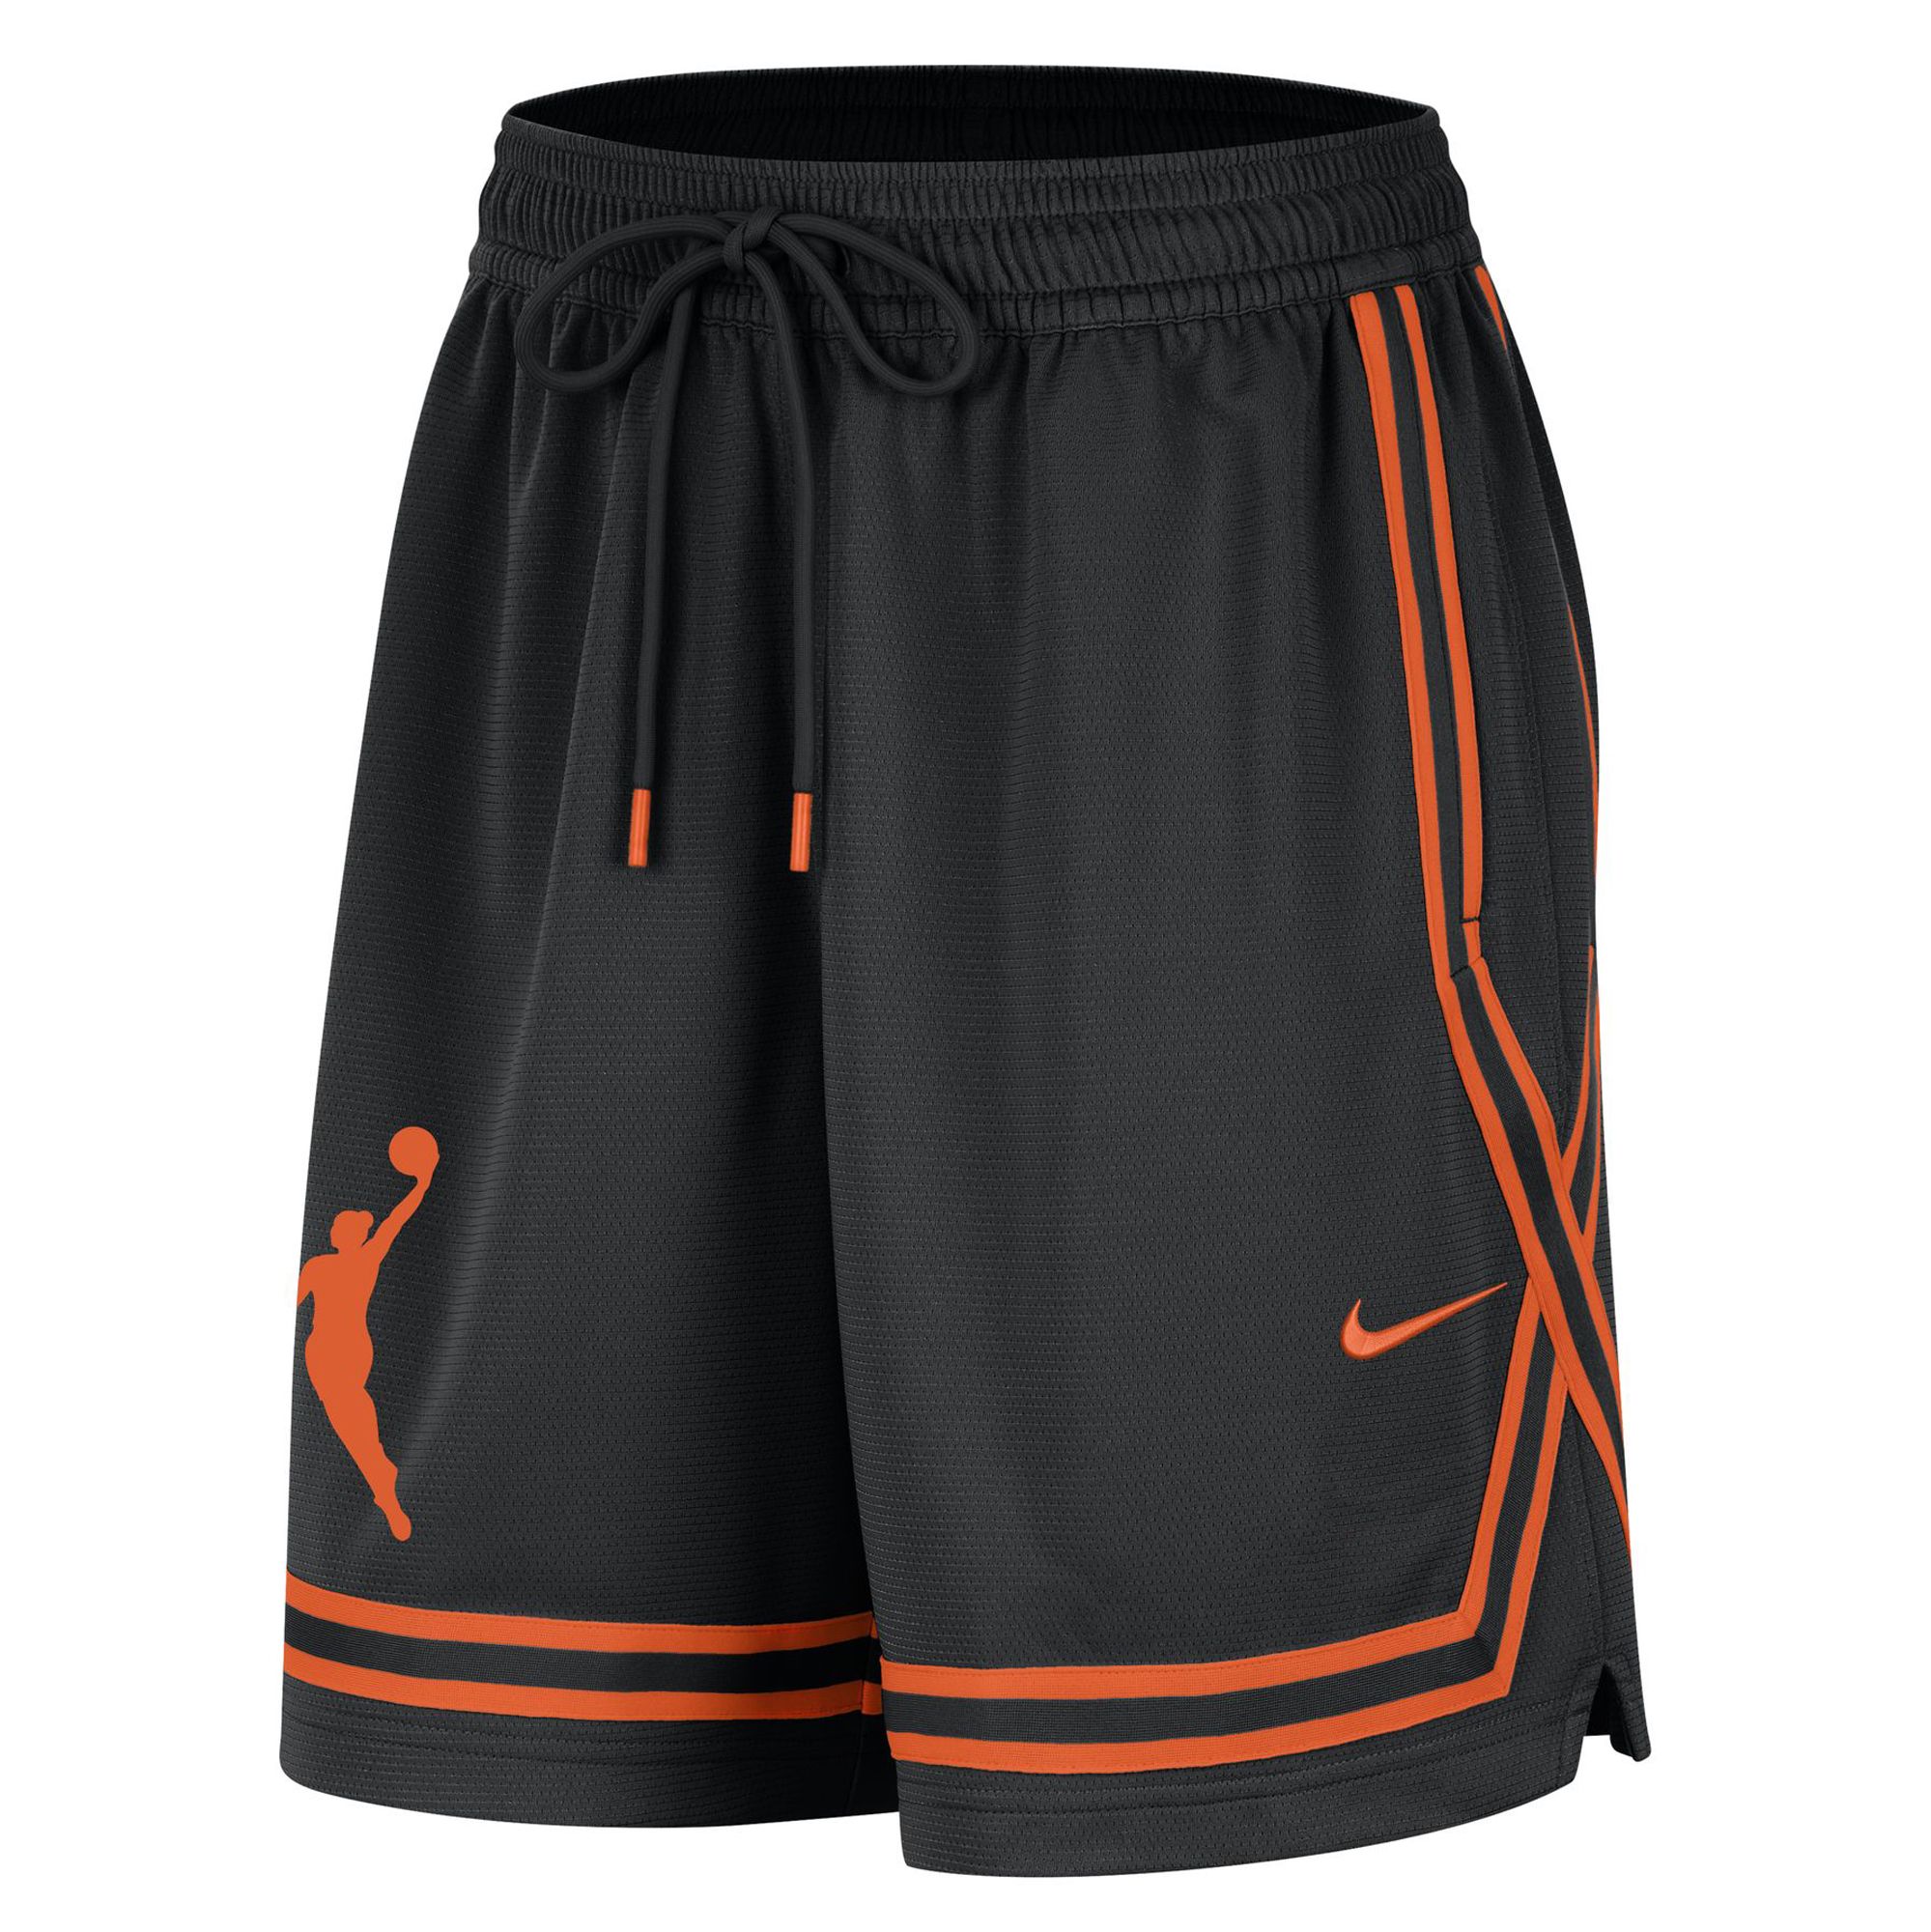 Orange & Grey Bling Nike Sports Bra & Shorts (Women's Size)